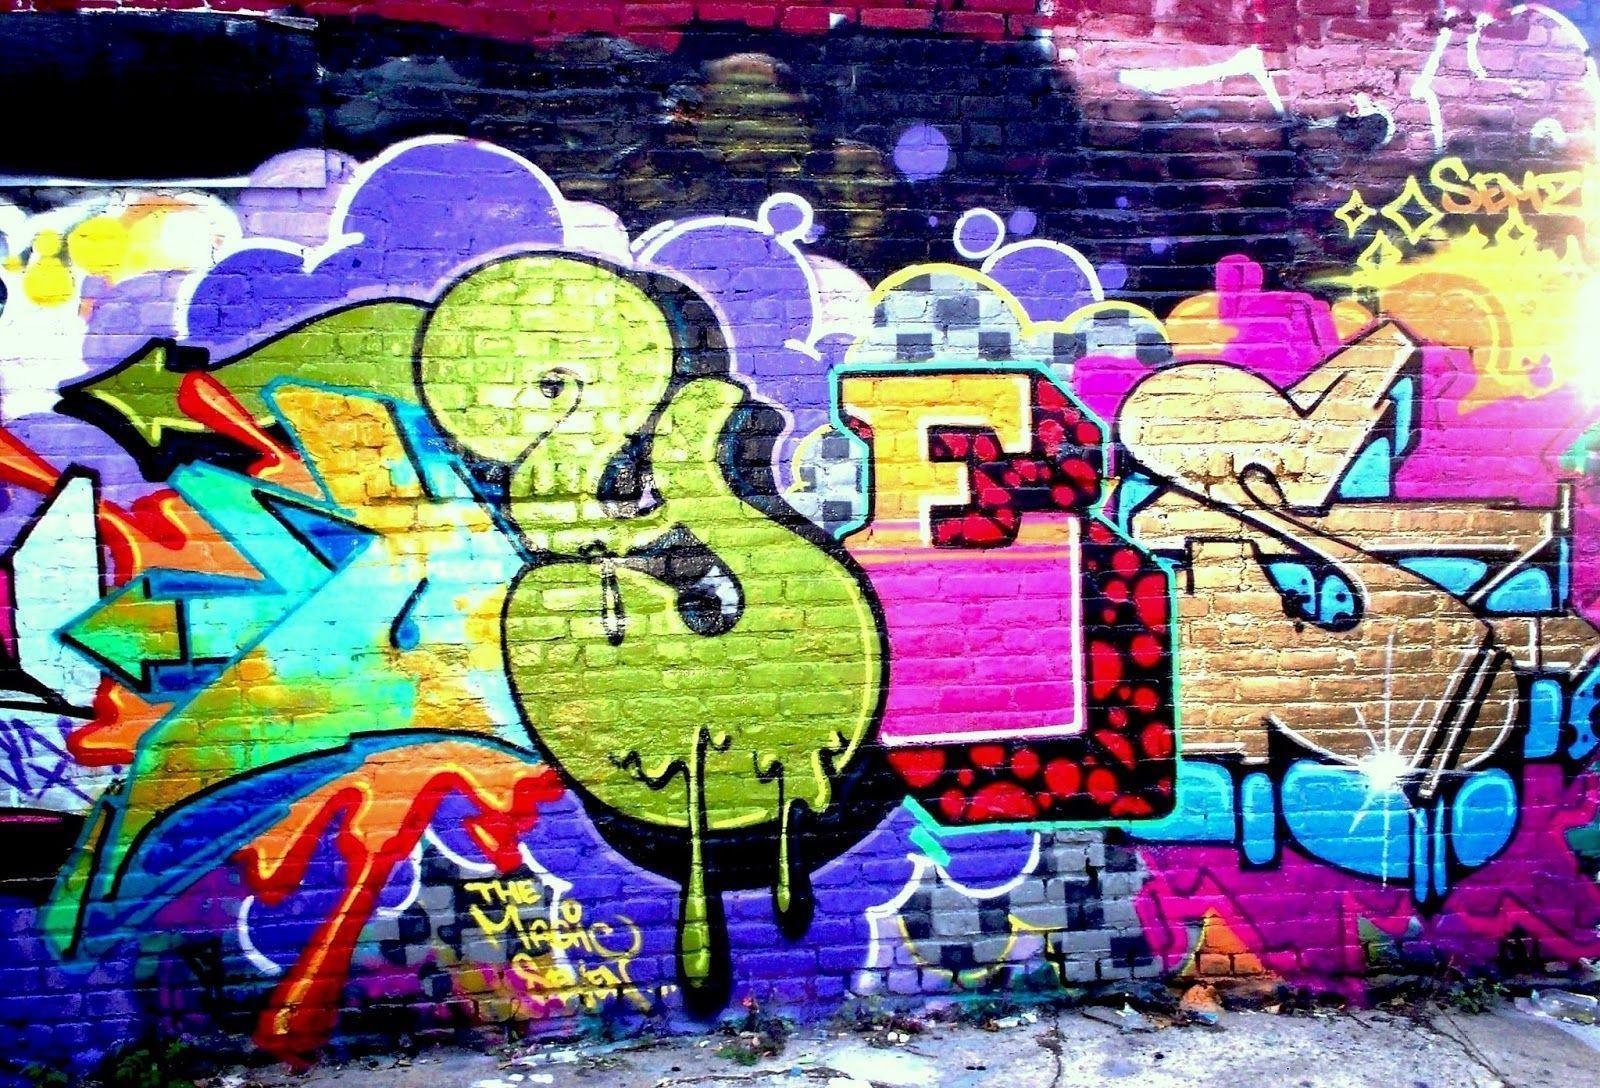 Hd Graffiti Wallpaper iPhone Wallpaper 1600x1088PX Wallpaper